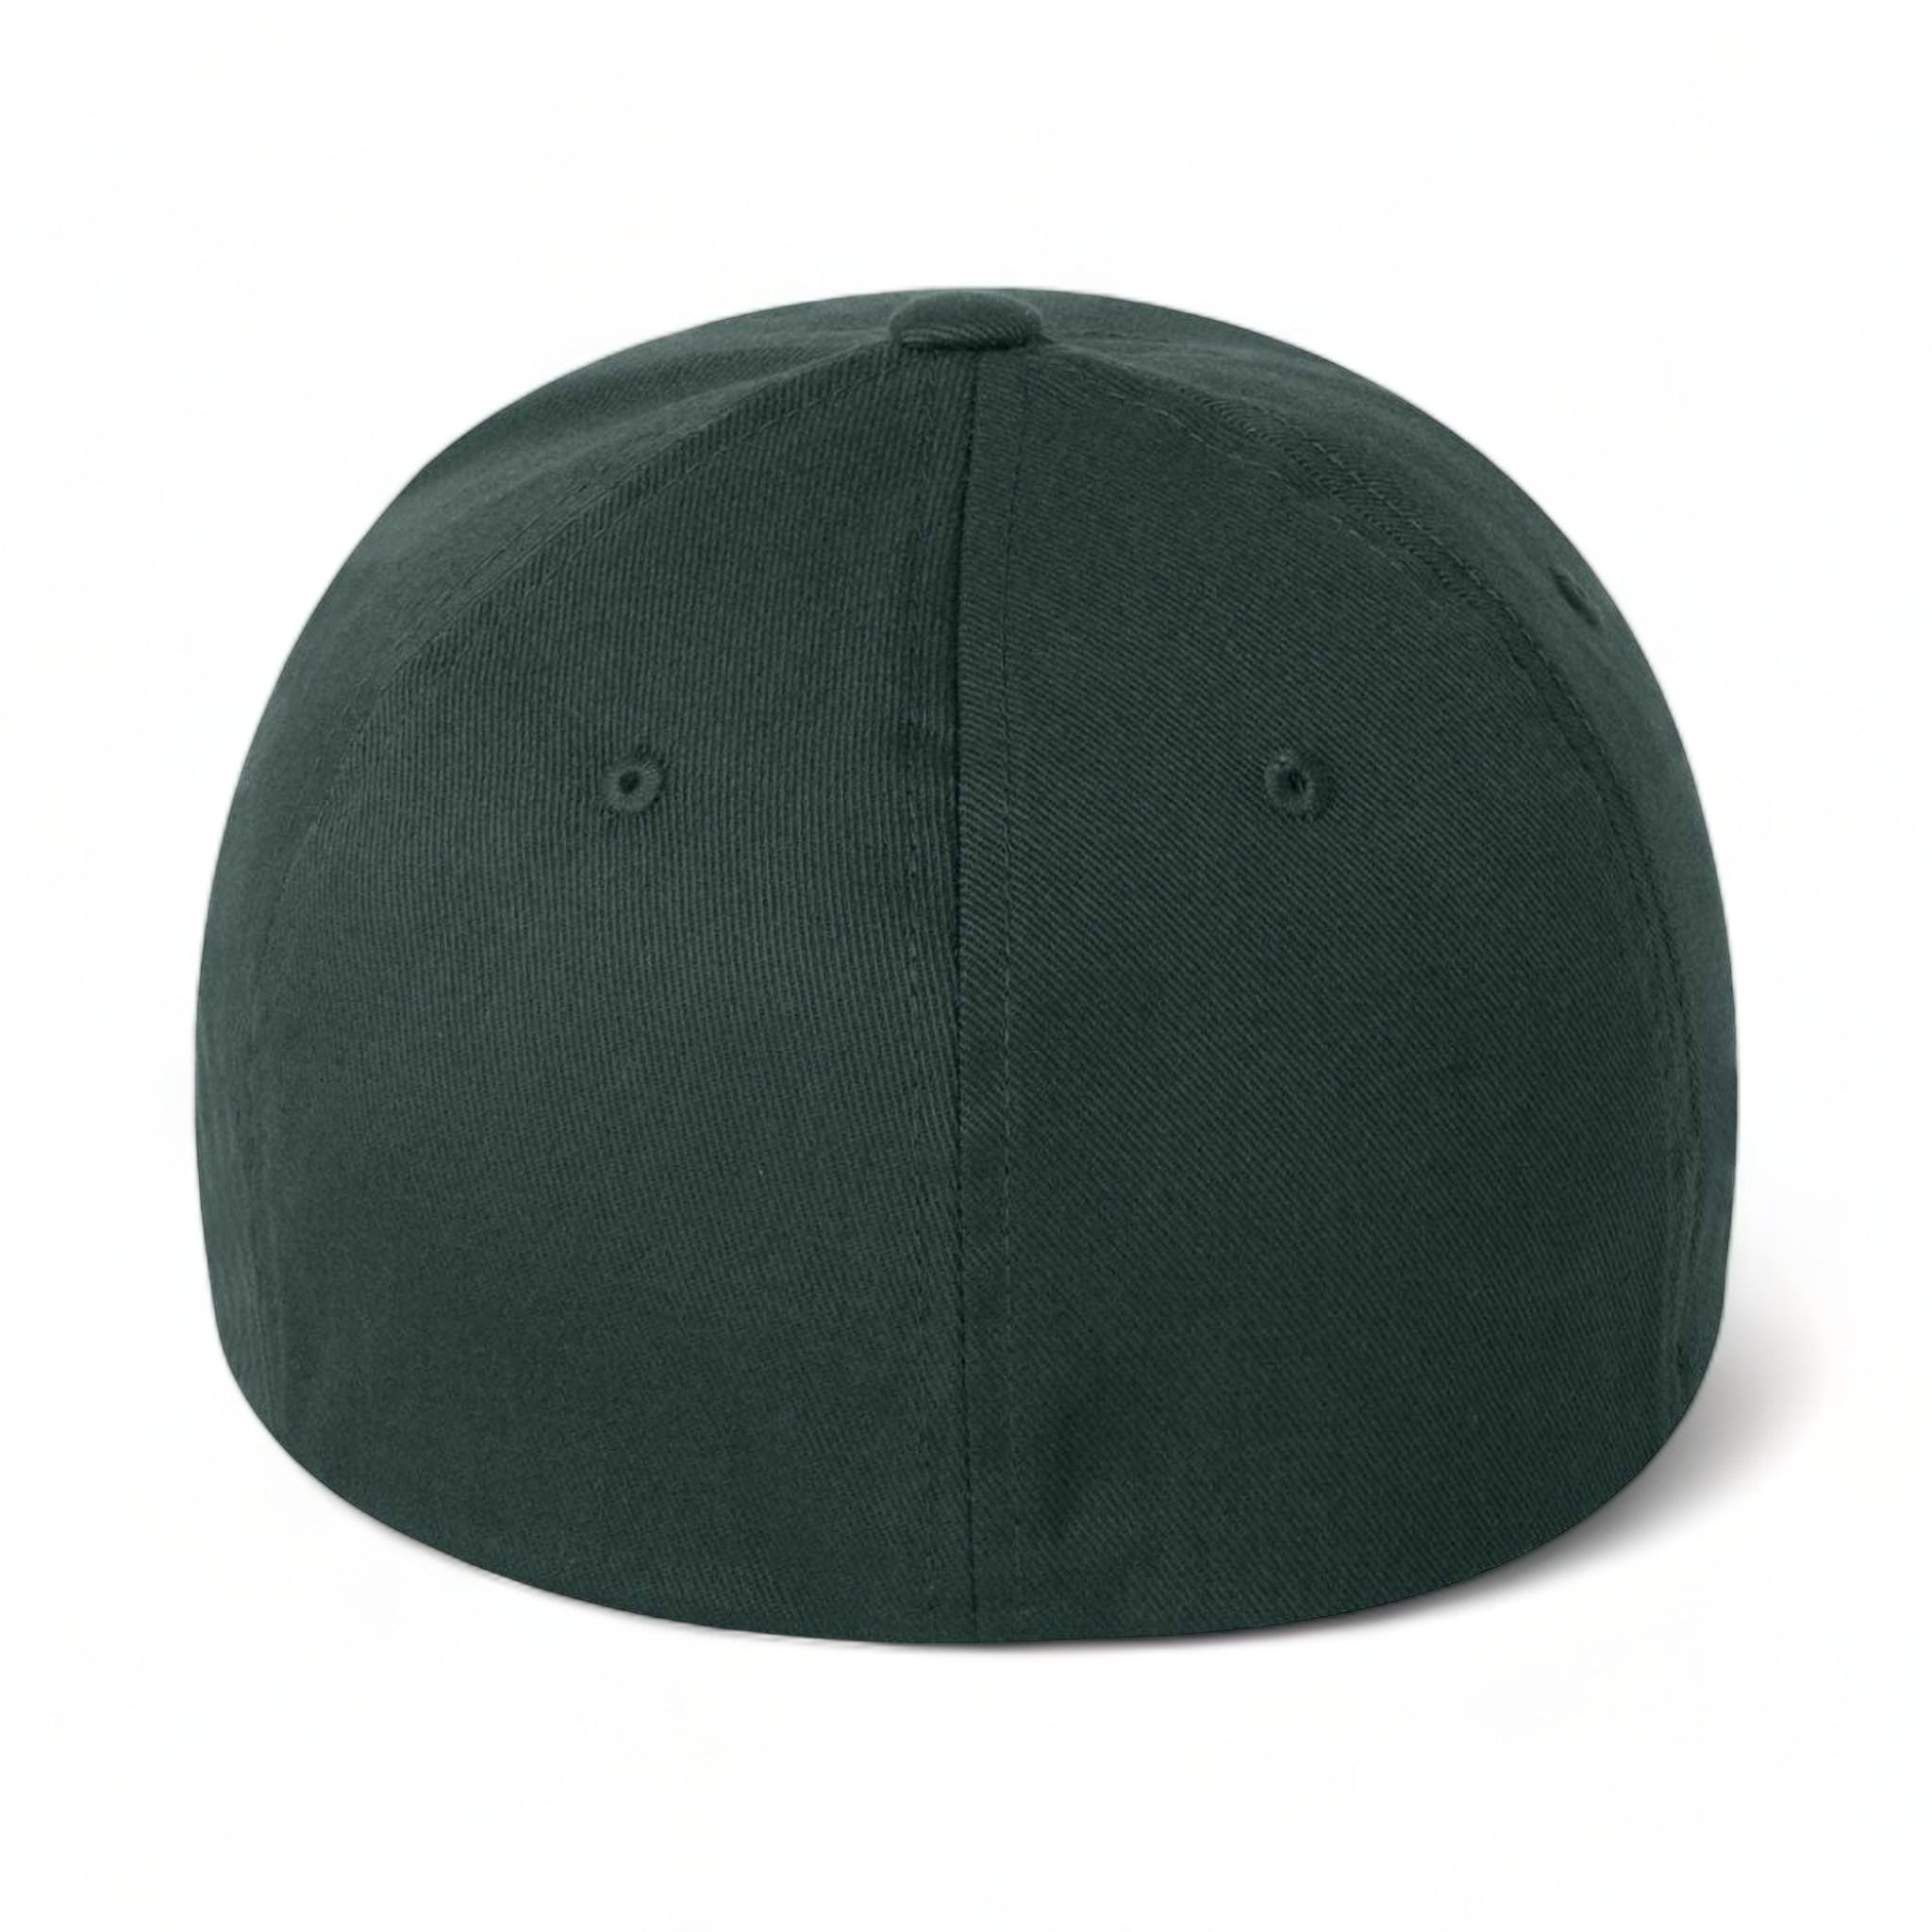 Back view of Flexfit 6277 custom hat in spruce